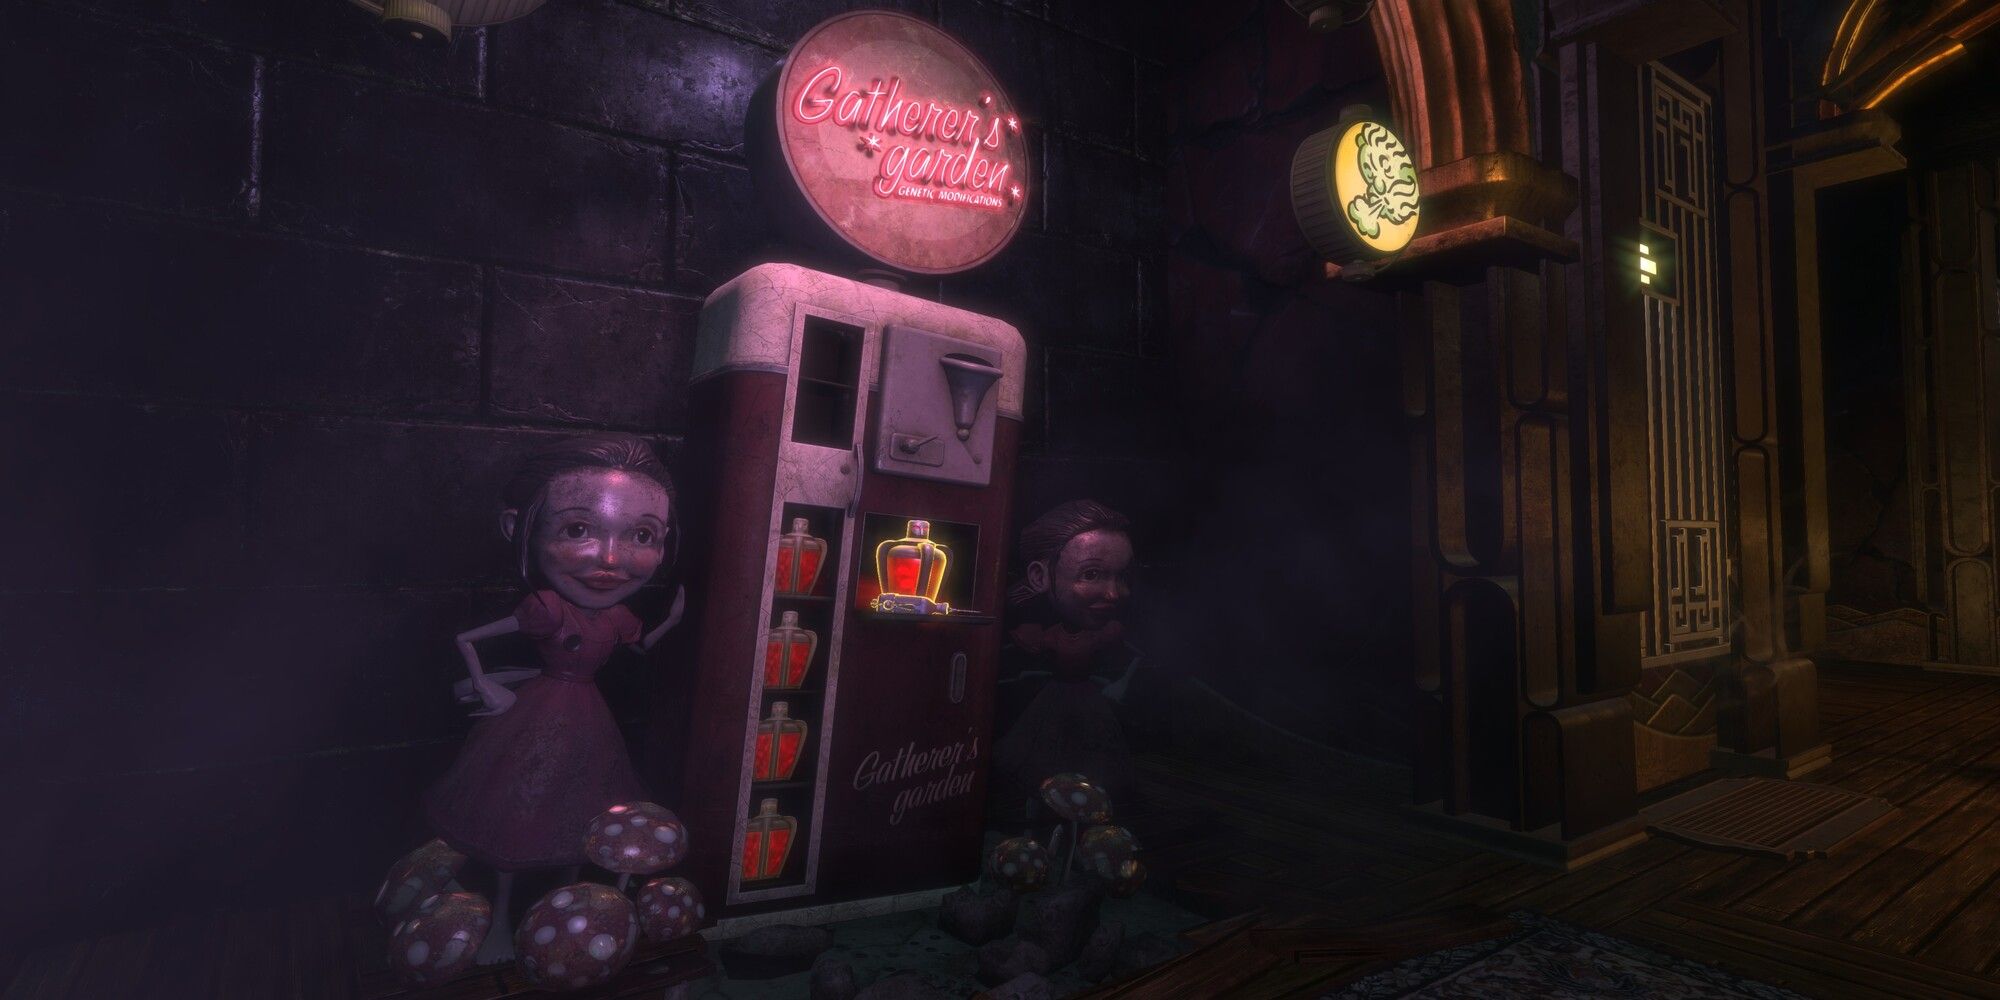 Gatherer's Garden Vending Machine In BioShock